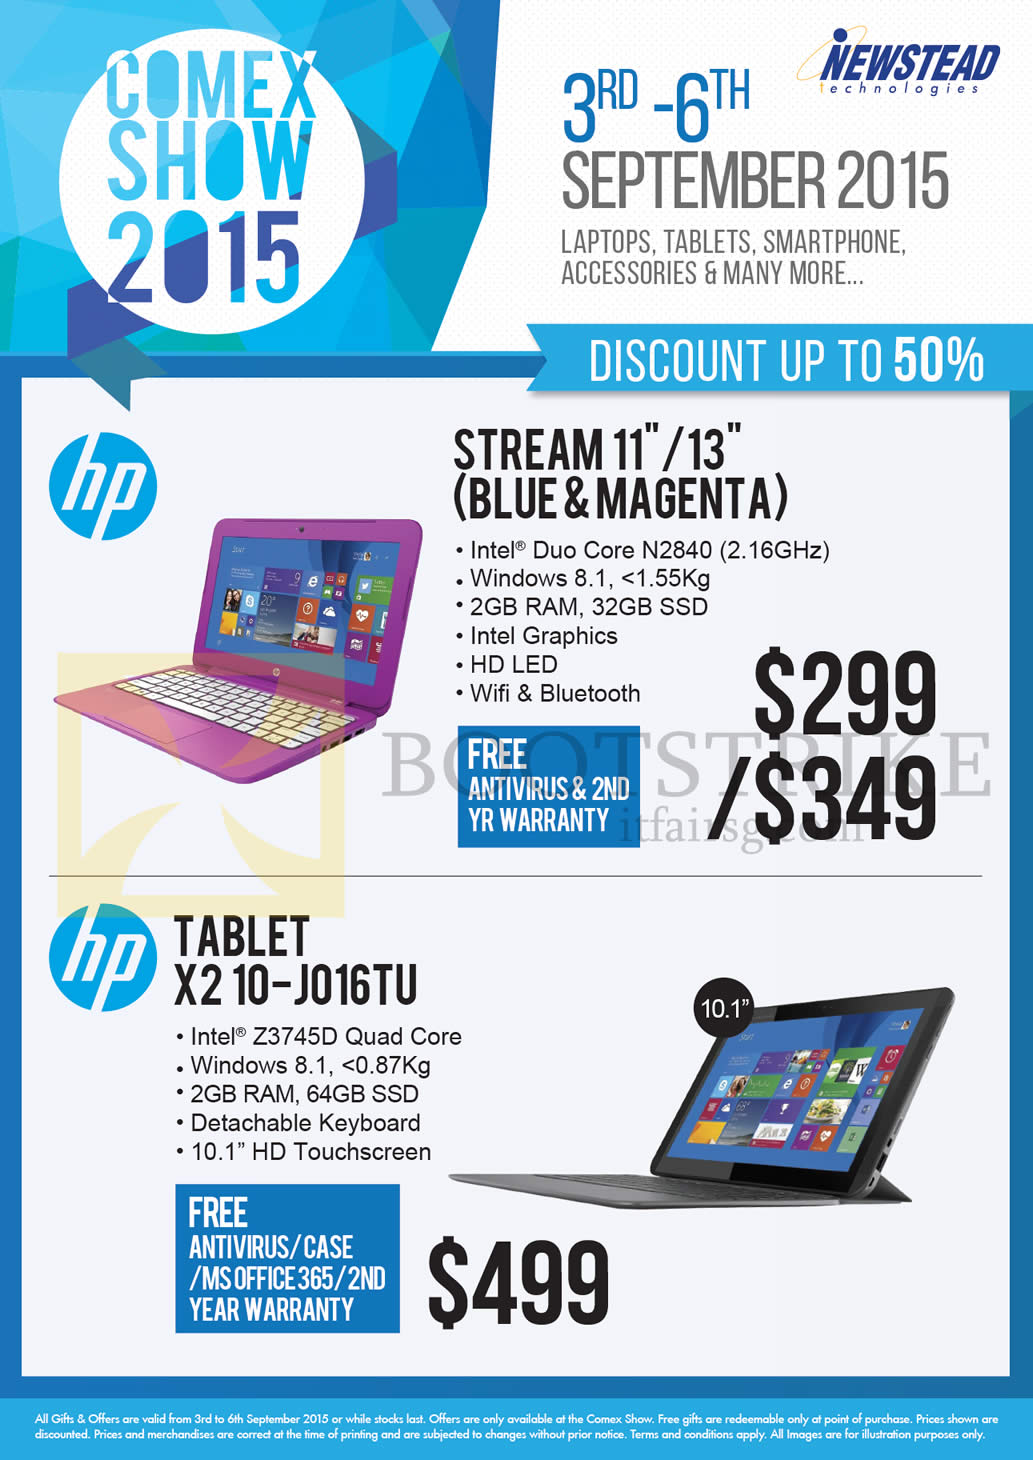 COMEX 2015 price list image brochure of HP Newstead Notebooks Stream 11 13, Tablet X2 10-J016TU